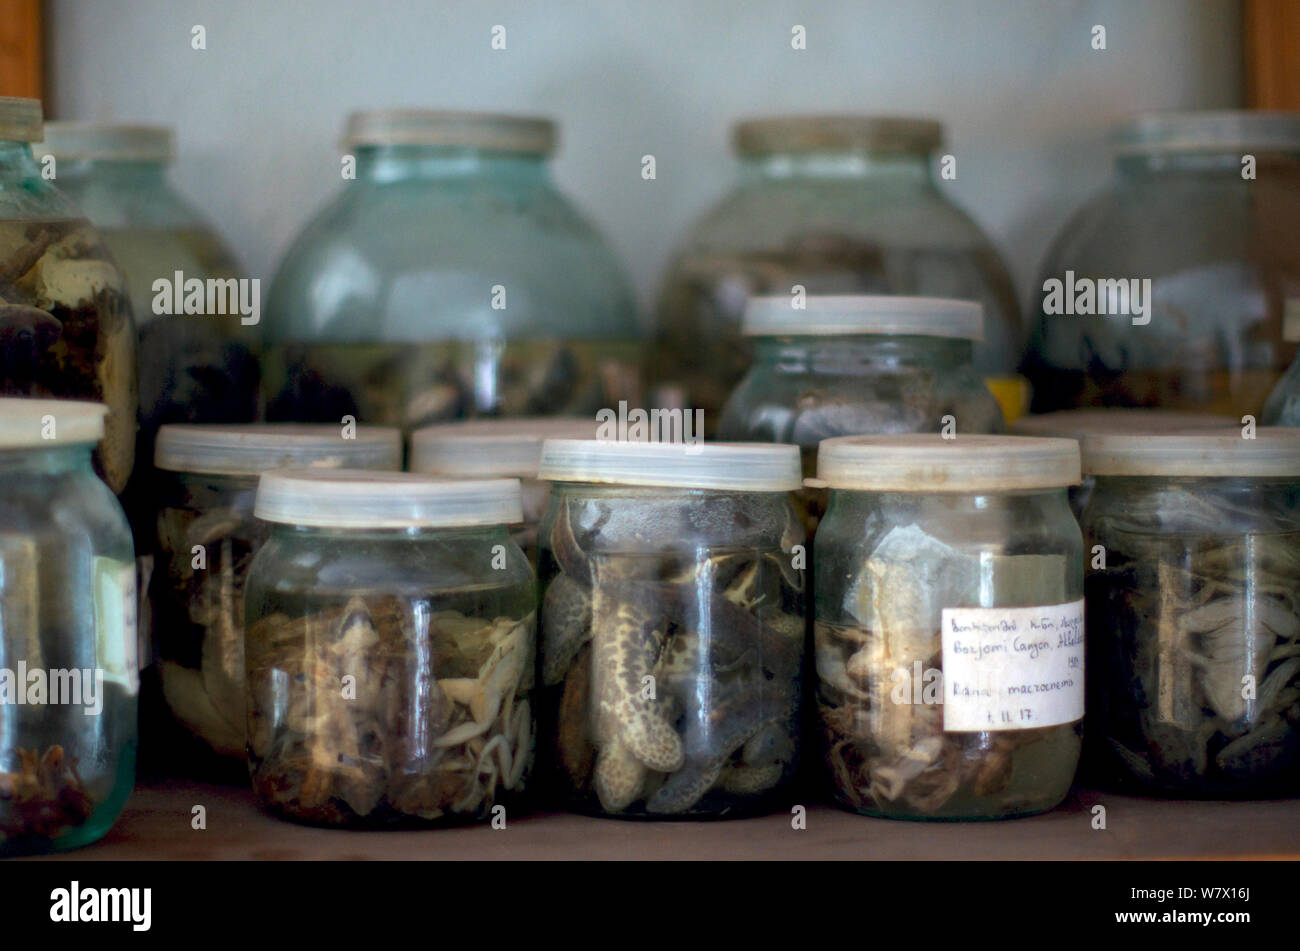 Collection of amphibian speciemens at the Ilia State University, Tbilisi, Georgia. Stock Photo